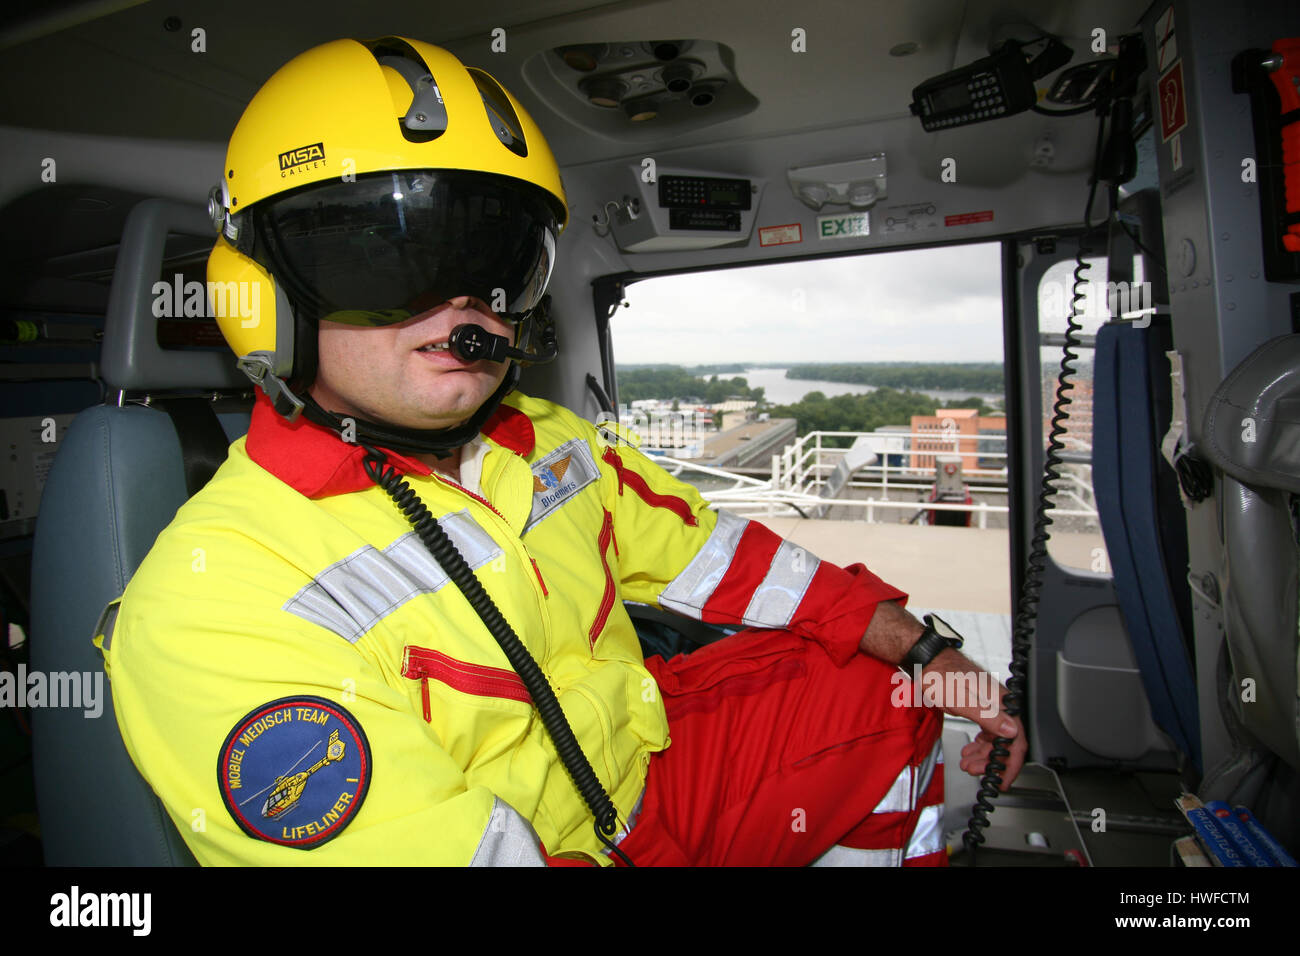 Air Ambulance in Olanda Foto Stock